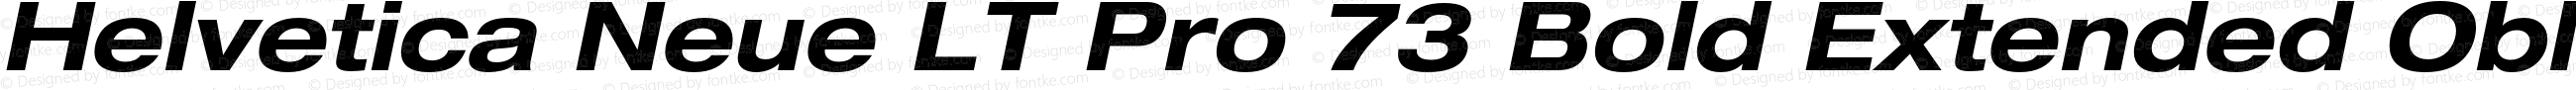 Helvetica Neue LT Pro 73 Bold Extended Oblique